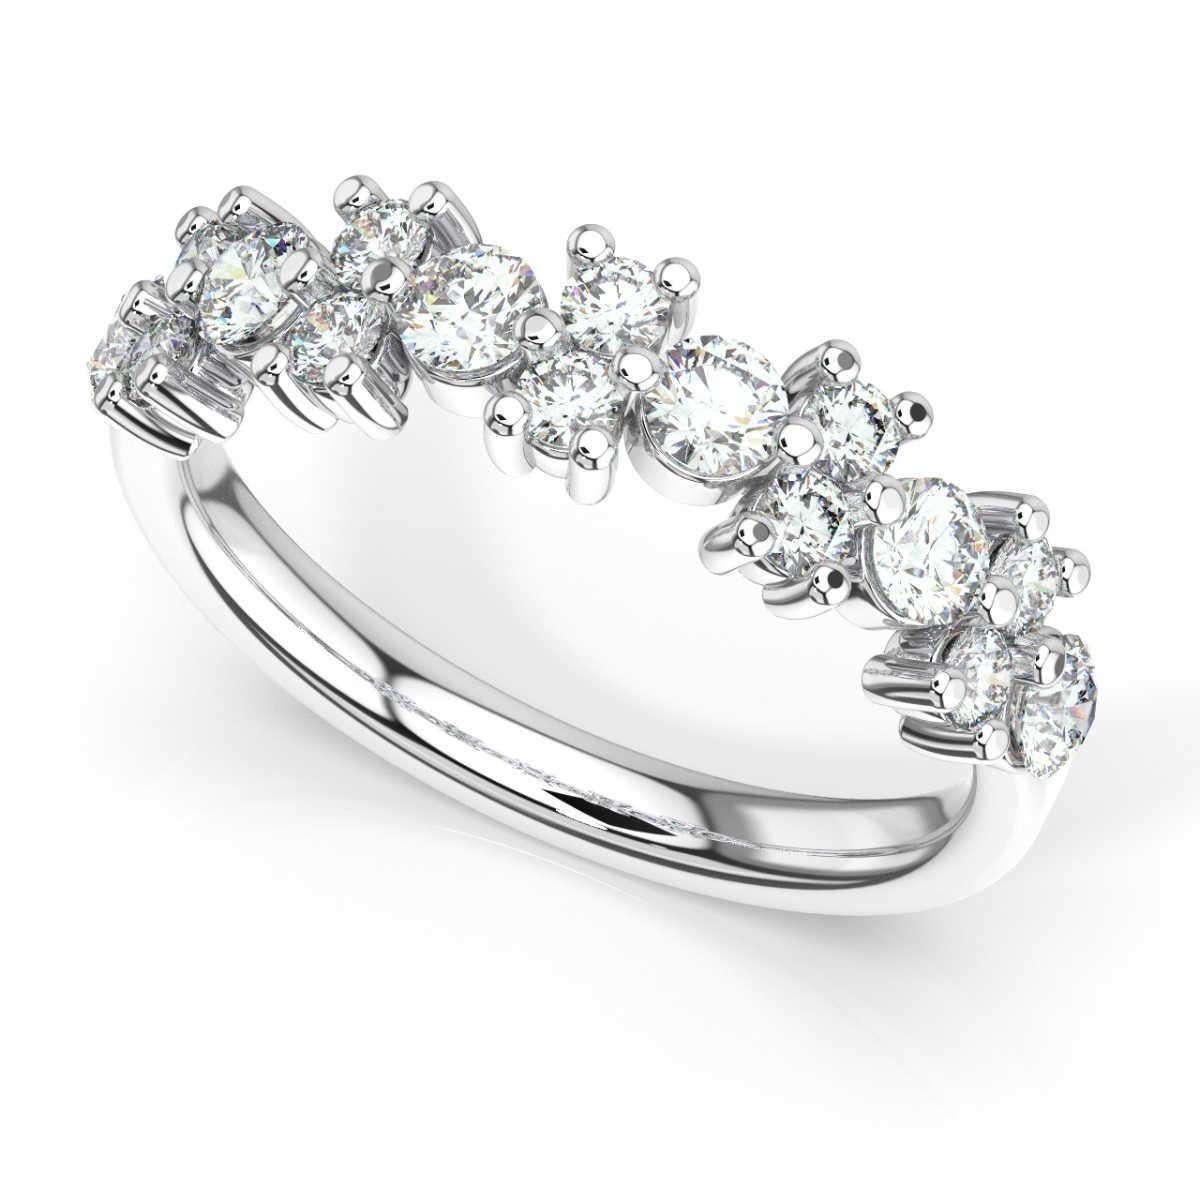 1ct diamond cluster ring